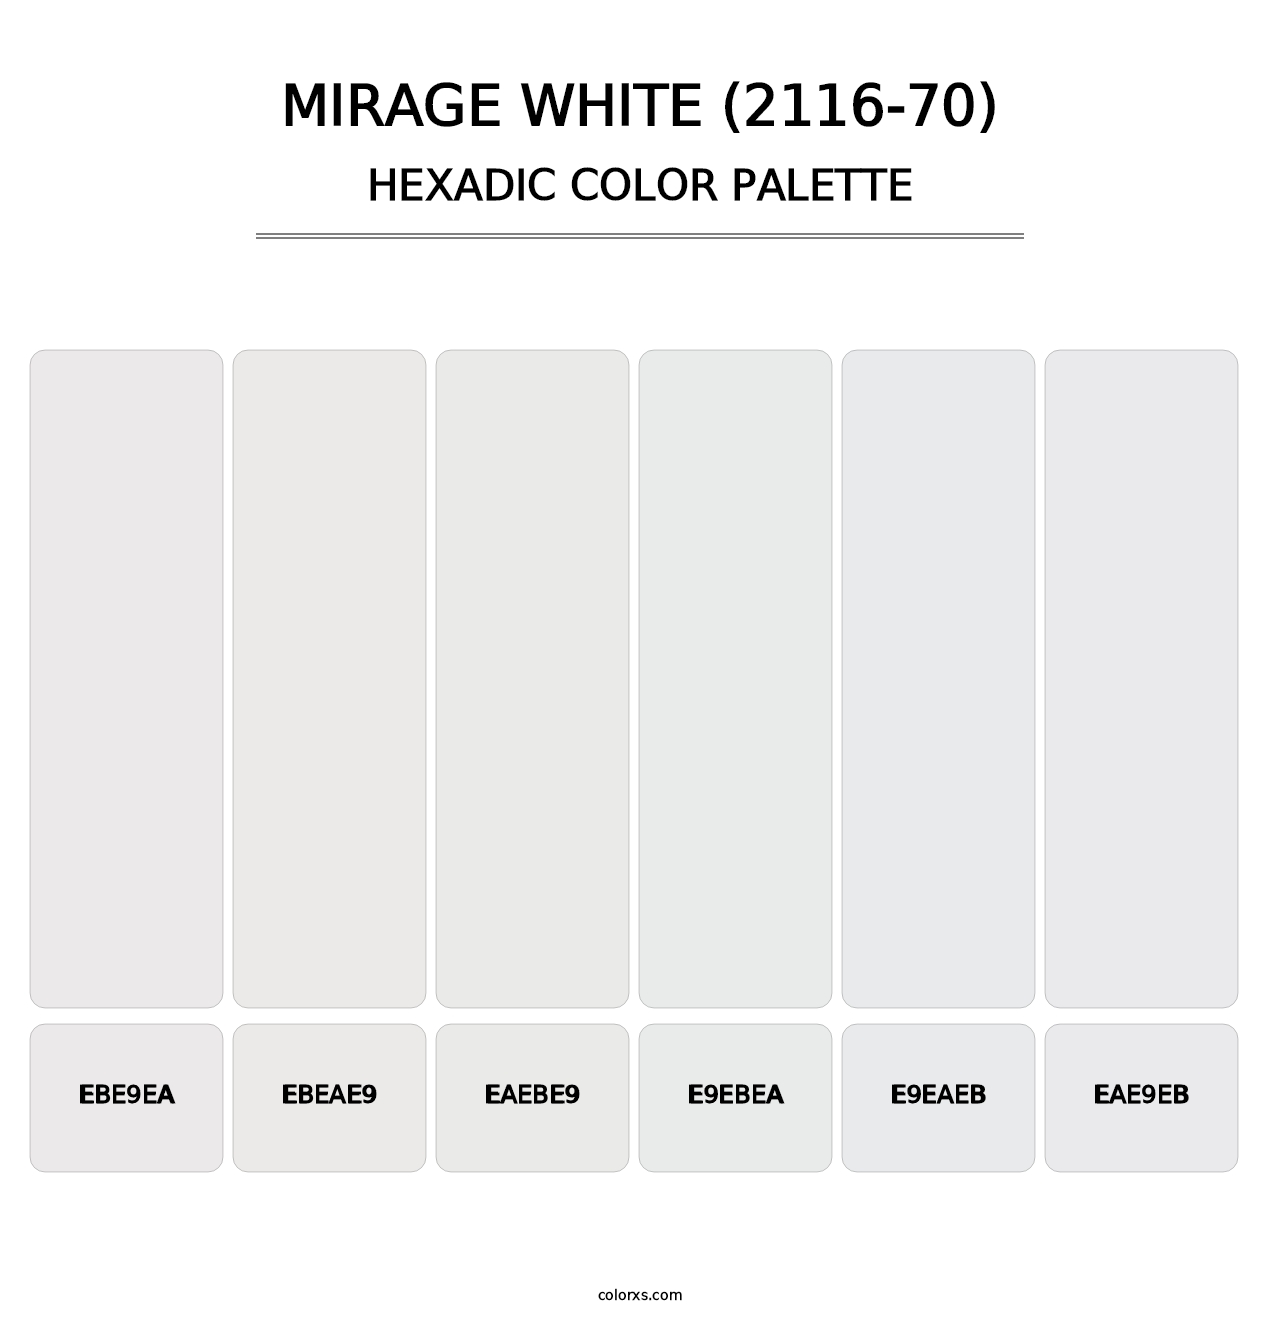 Mirage White (2116-70) - Hexadic Color Palette